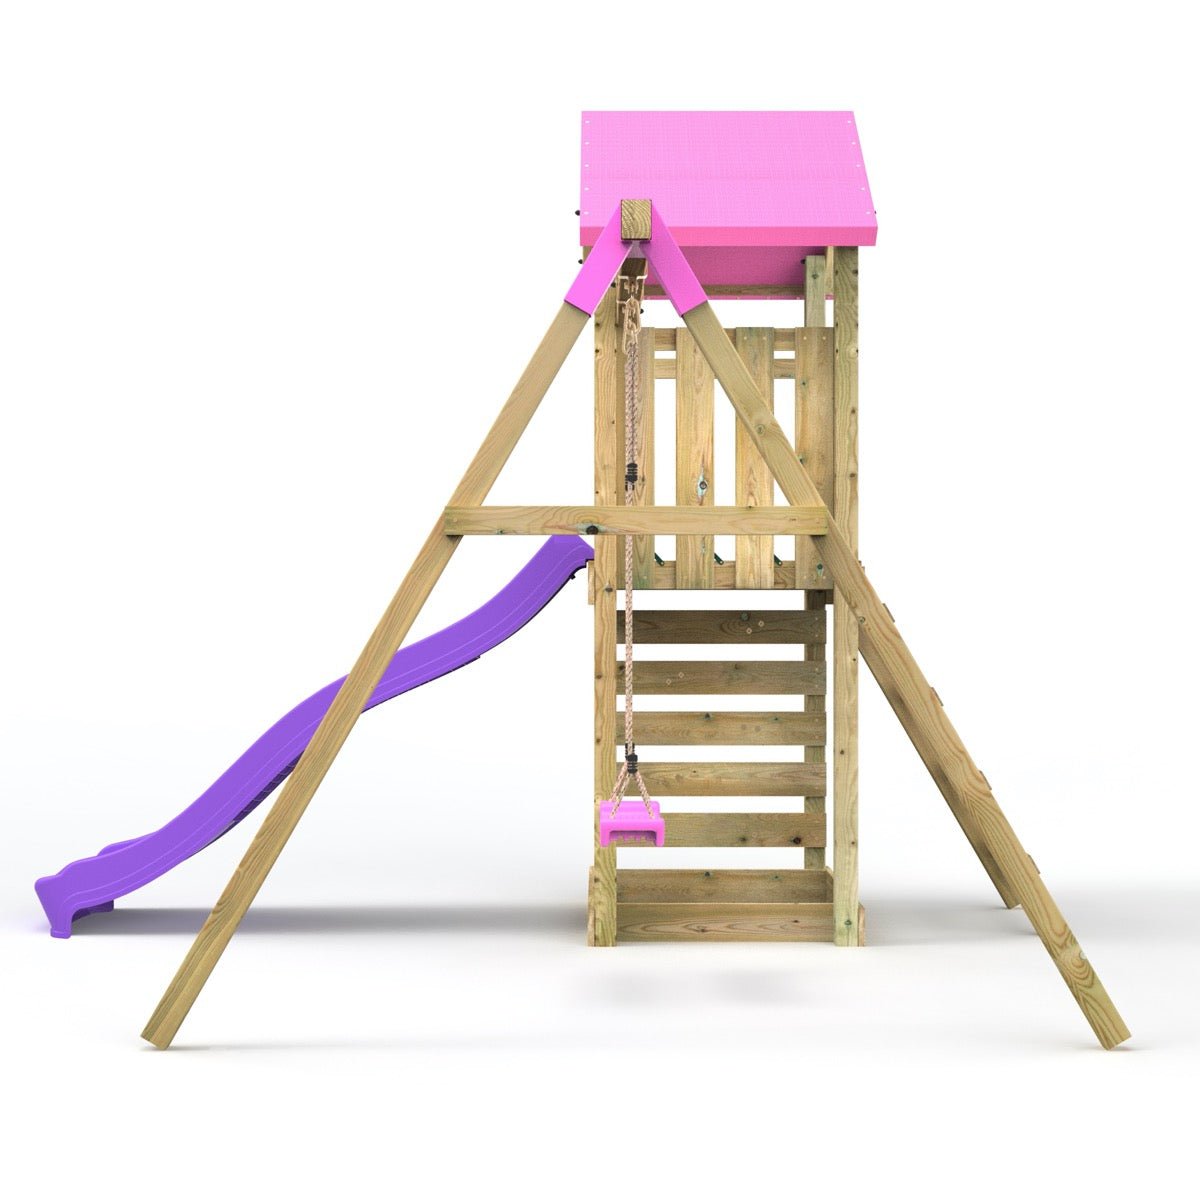 Rebo Adventure Wooden Climbing Frame, Swing Set and Slide - Rushmore Pink